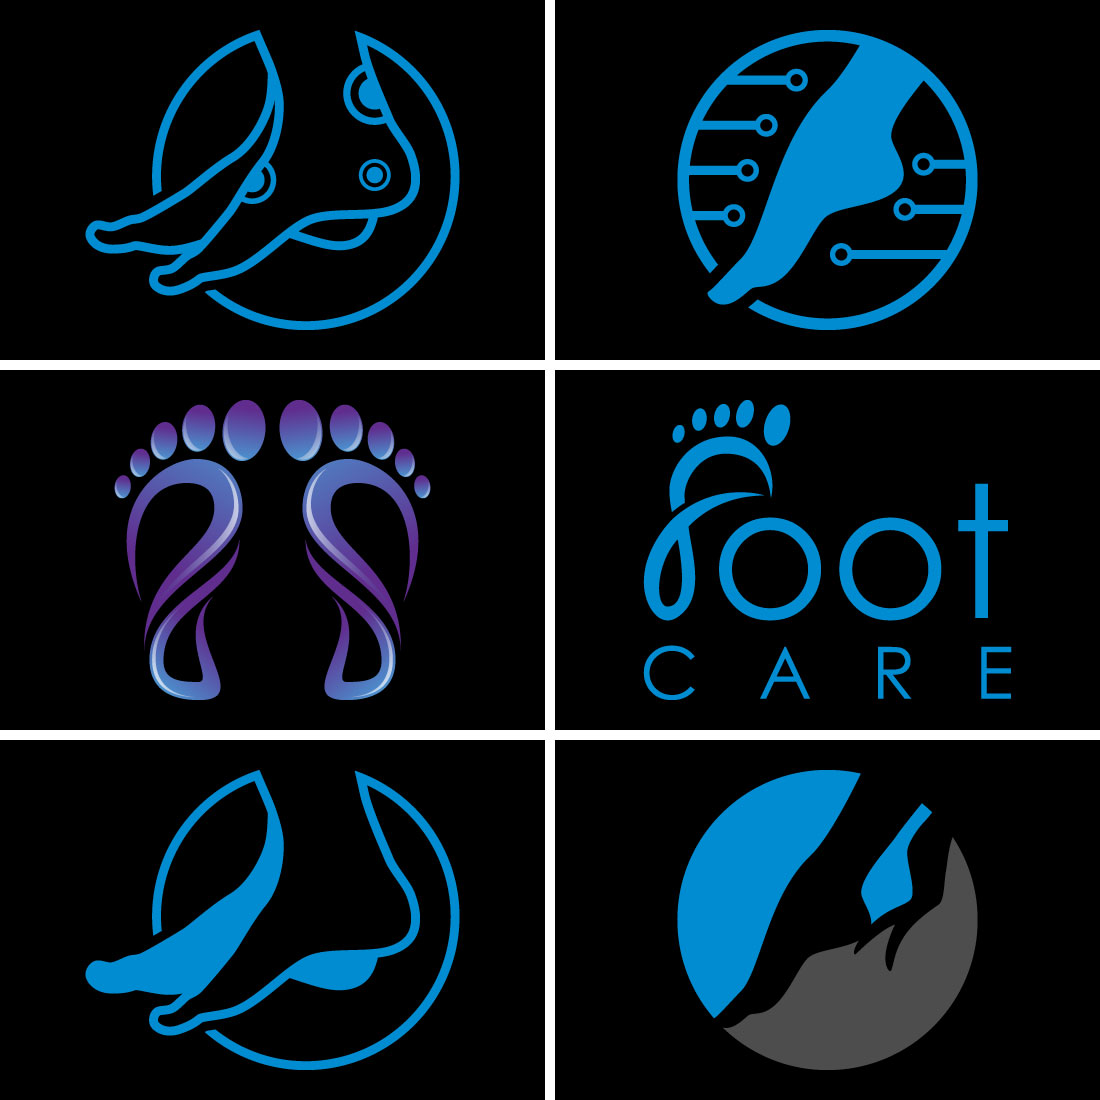 Foot Care Logo Design main cover.